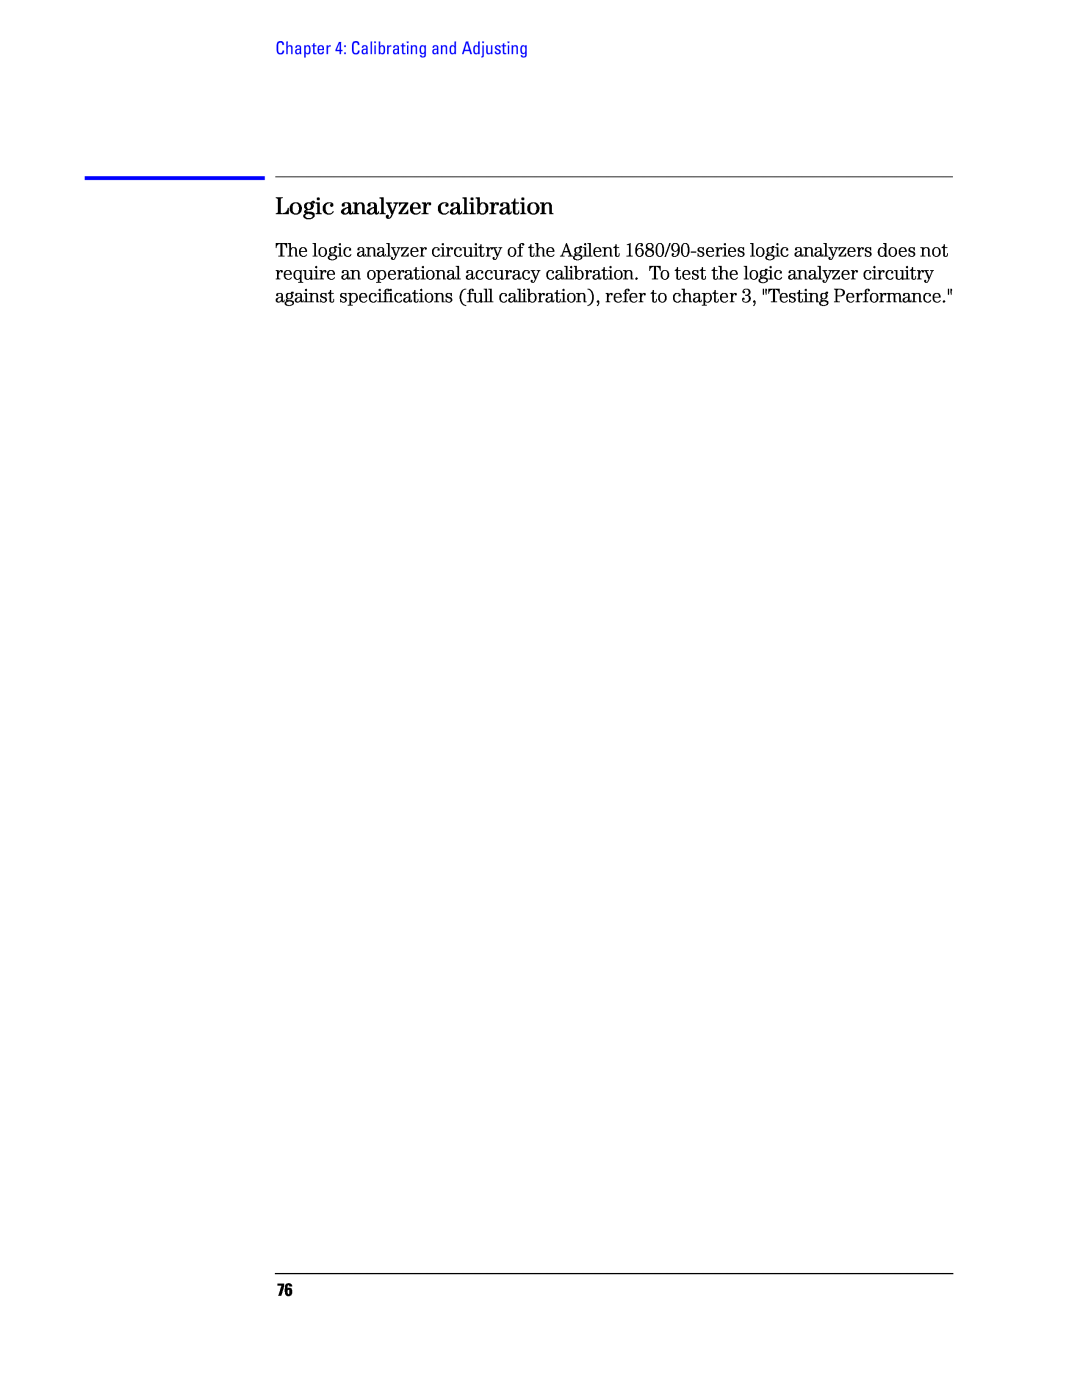 Agilent Technologies 1680, 1690 manual Logic analyzer calibration, Calibrating and Adjusting 